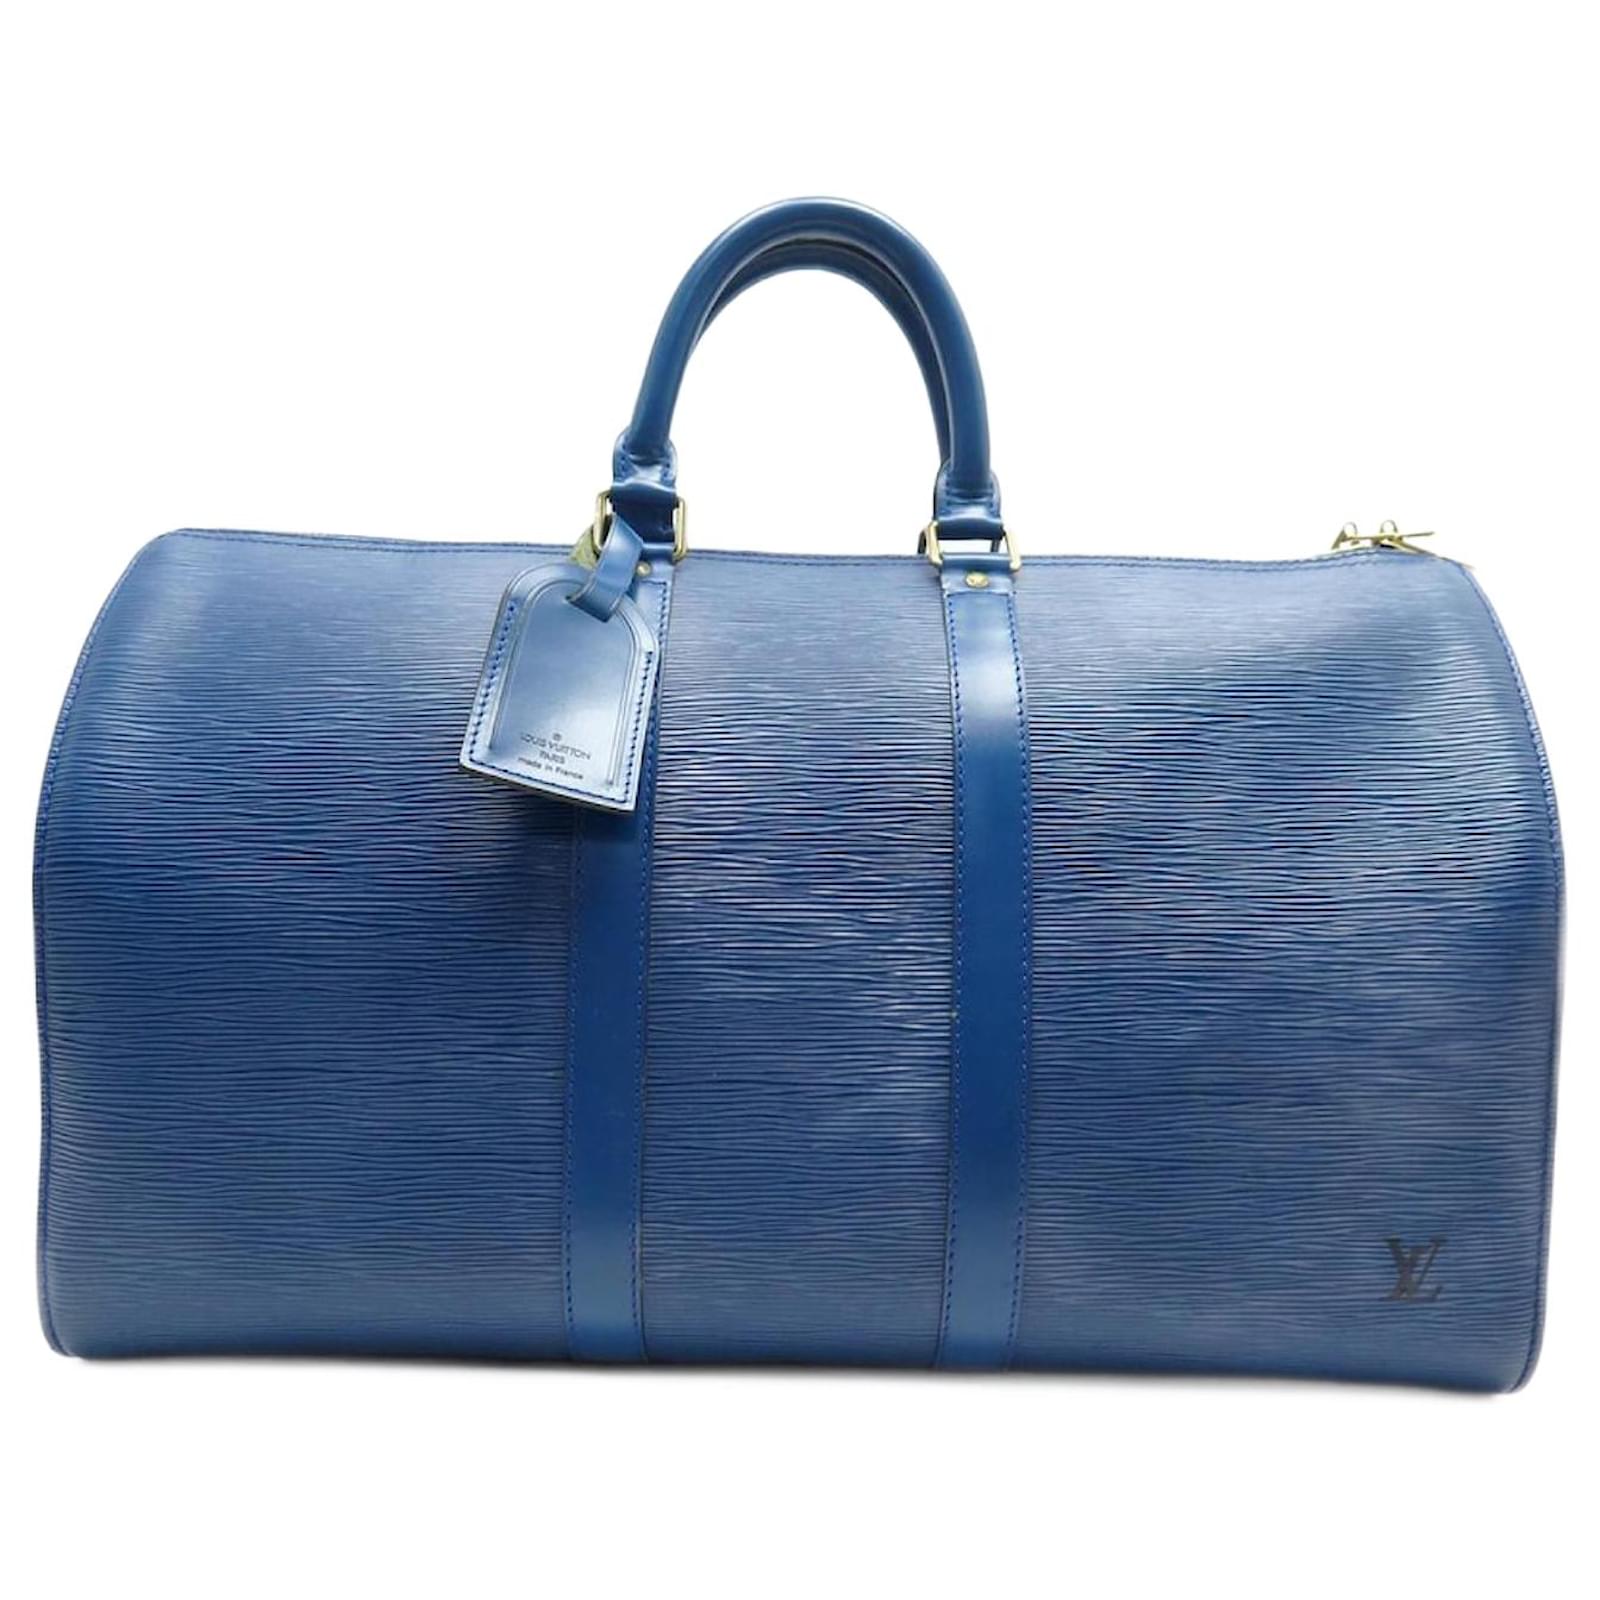 Louis Vuitton Keepall 45 Epi Leather Duffel Bag on SALE